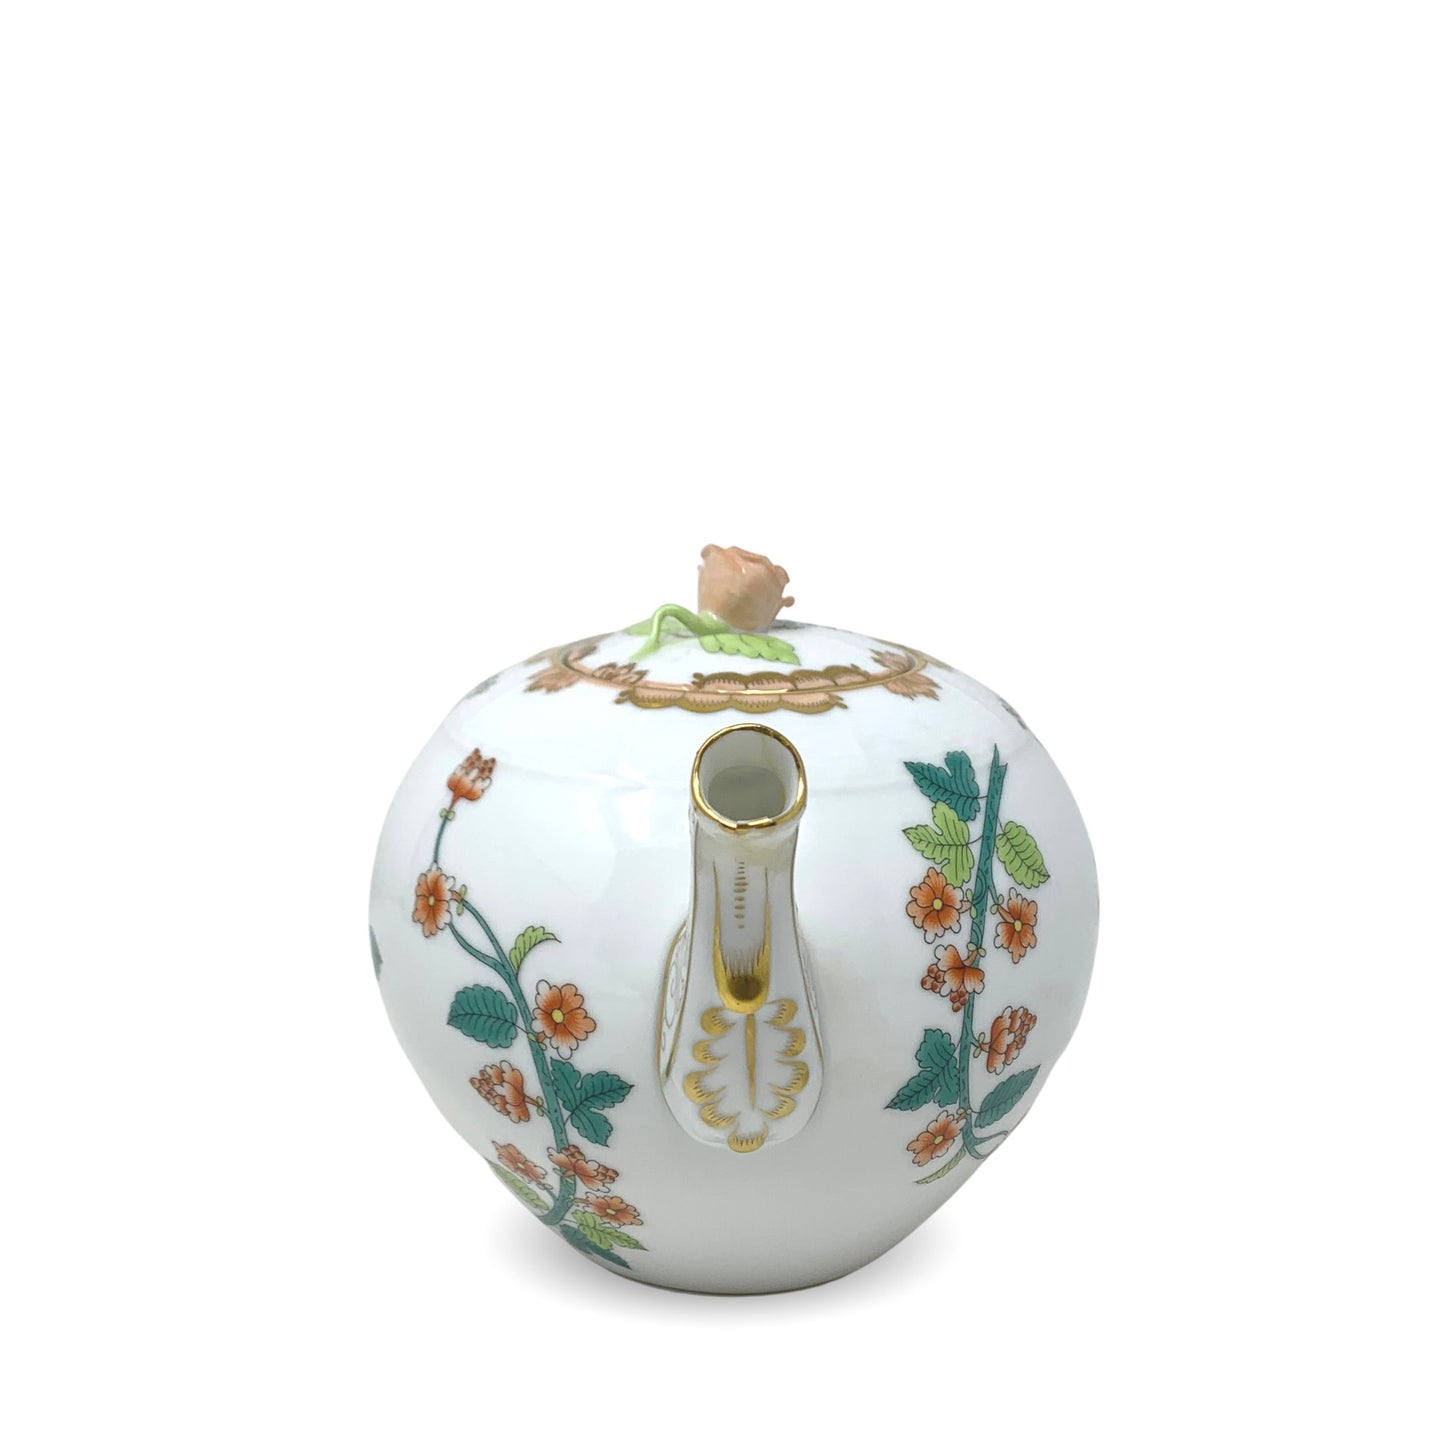 Herend "Livia" #602 Porcelain Teapot